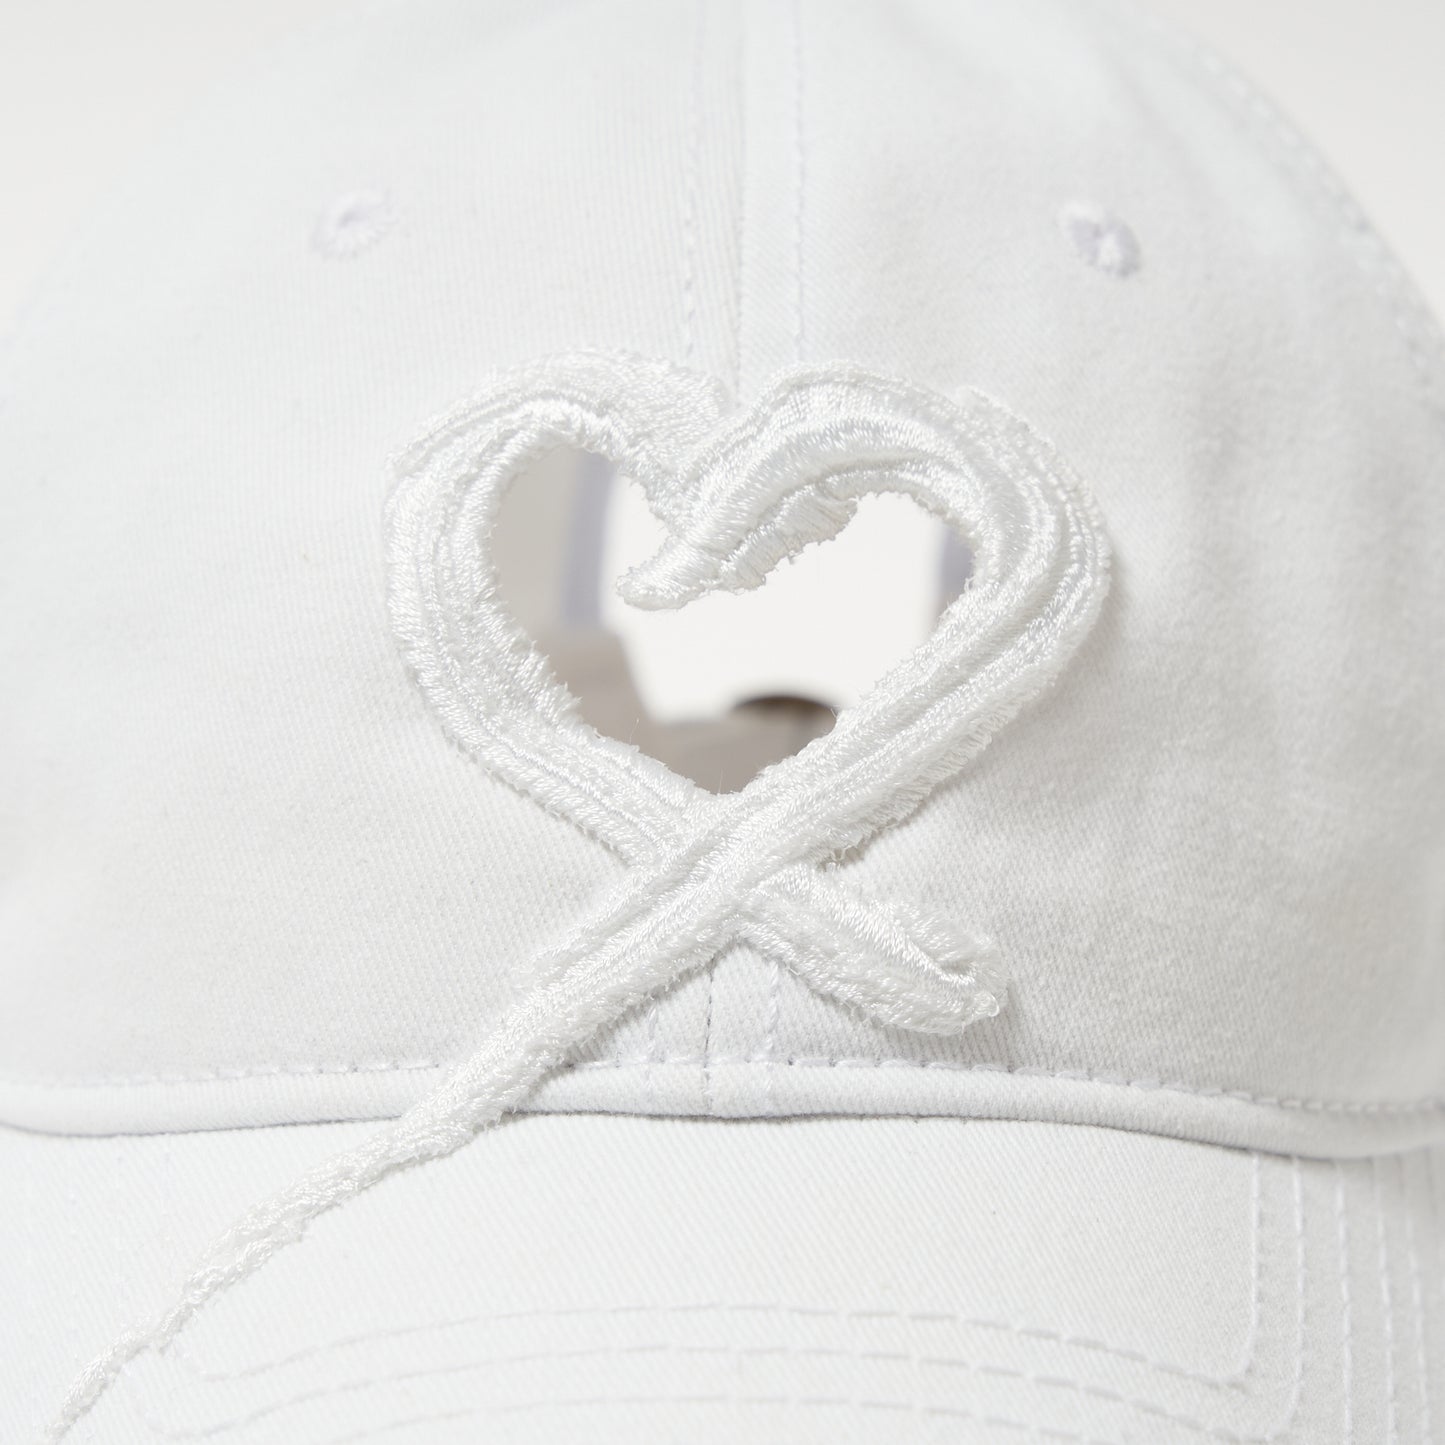 Heart whipped cream cap【Stock】